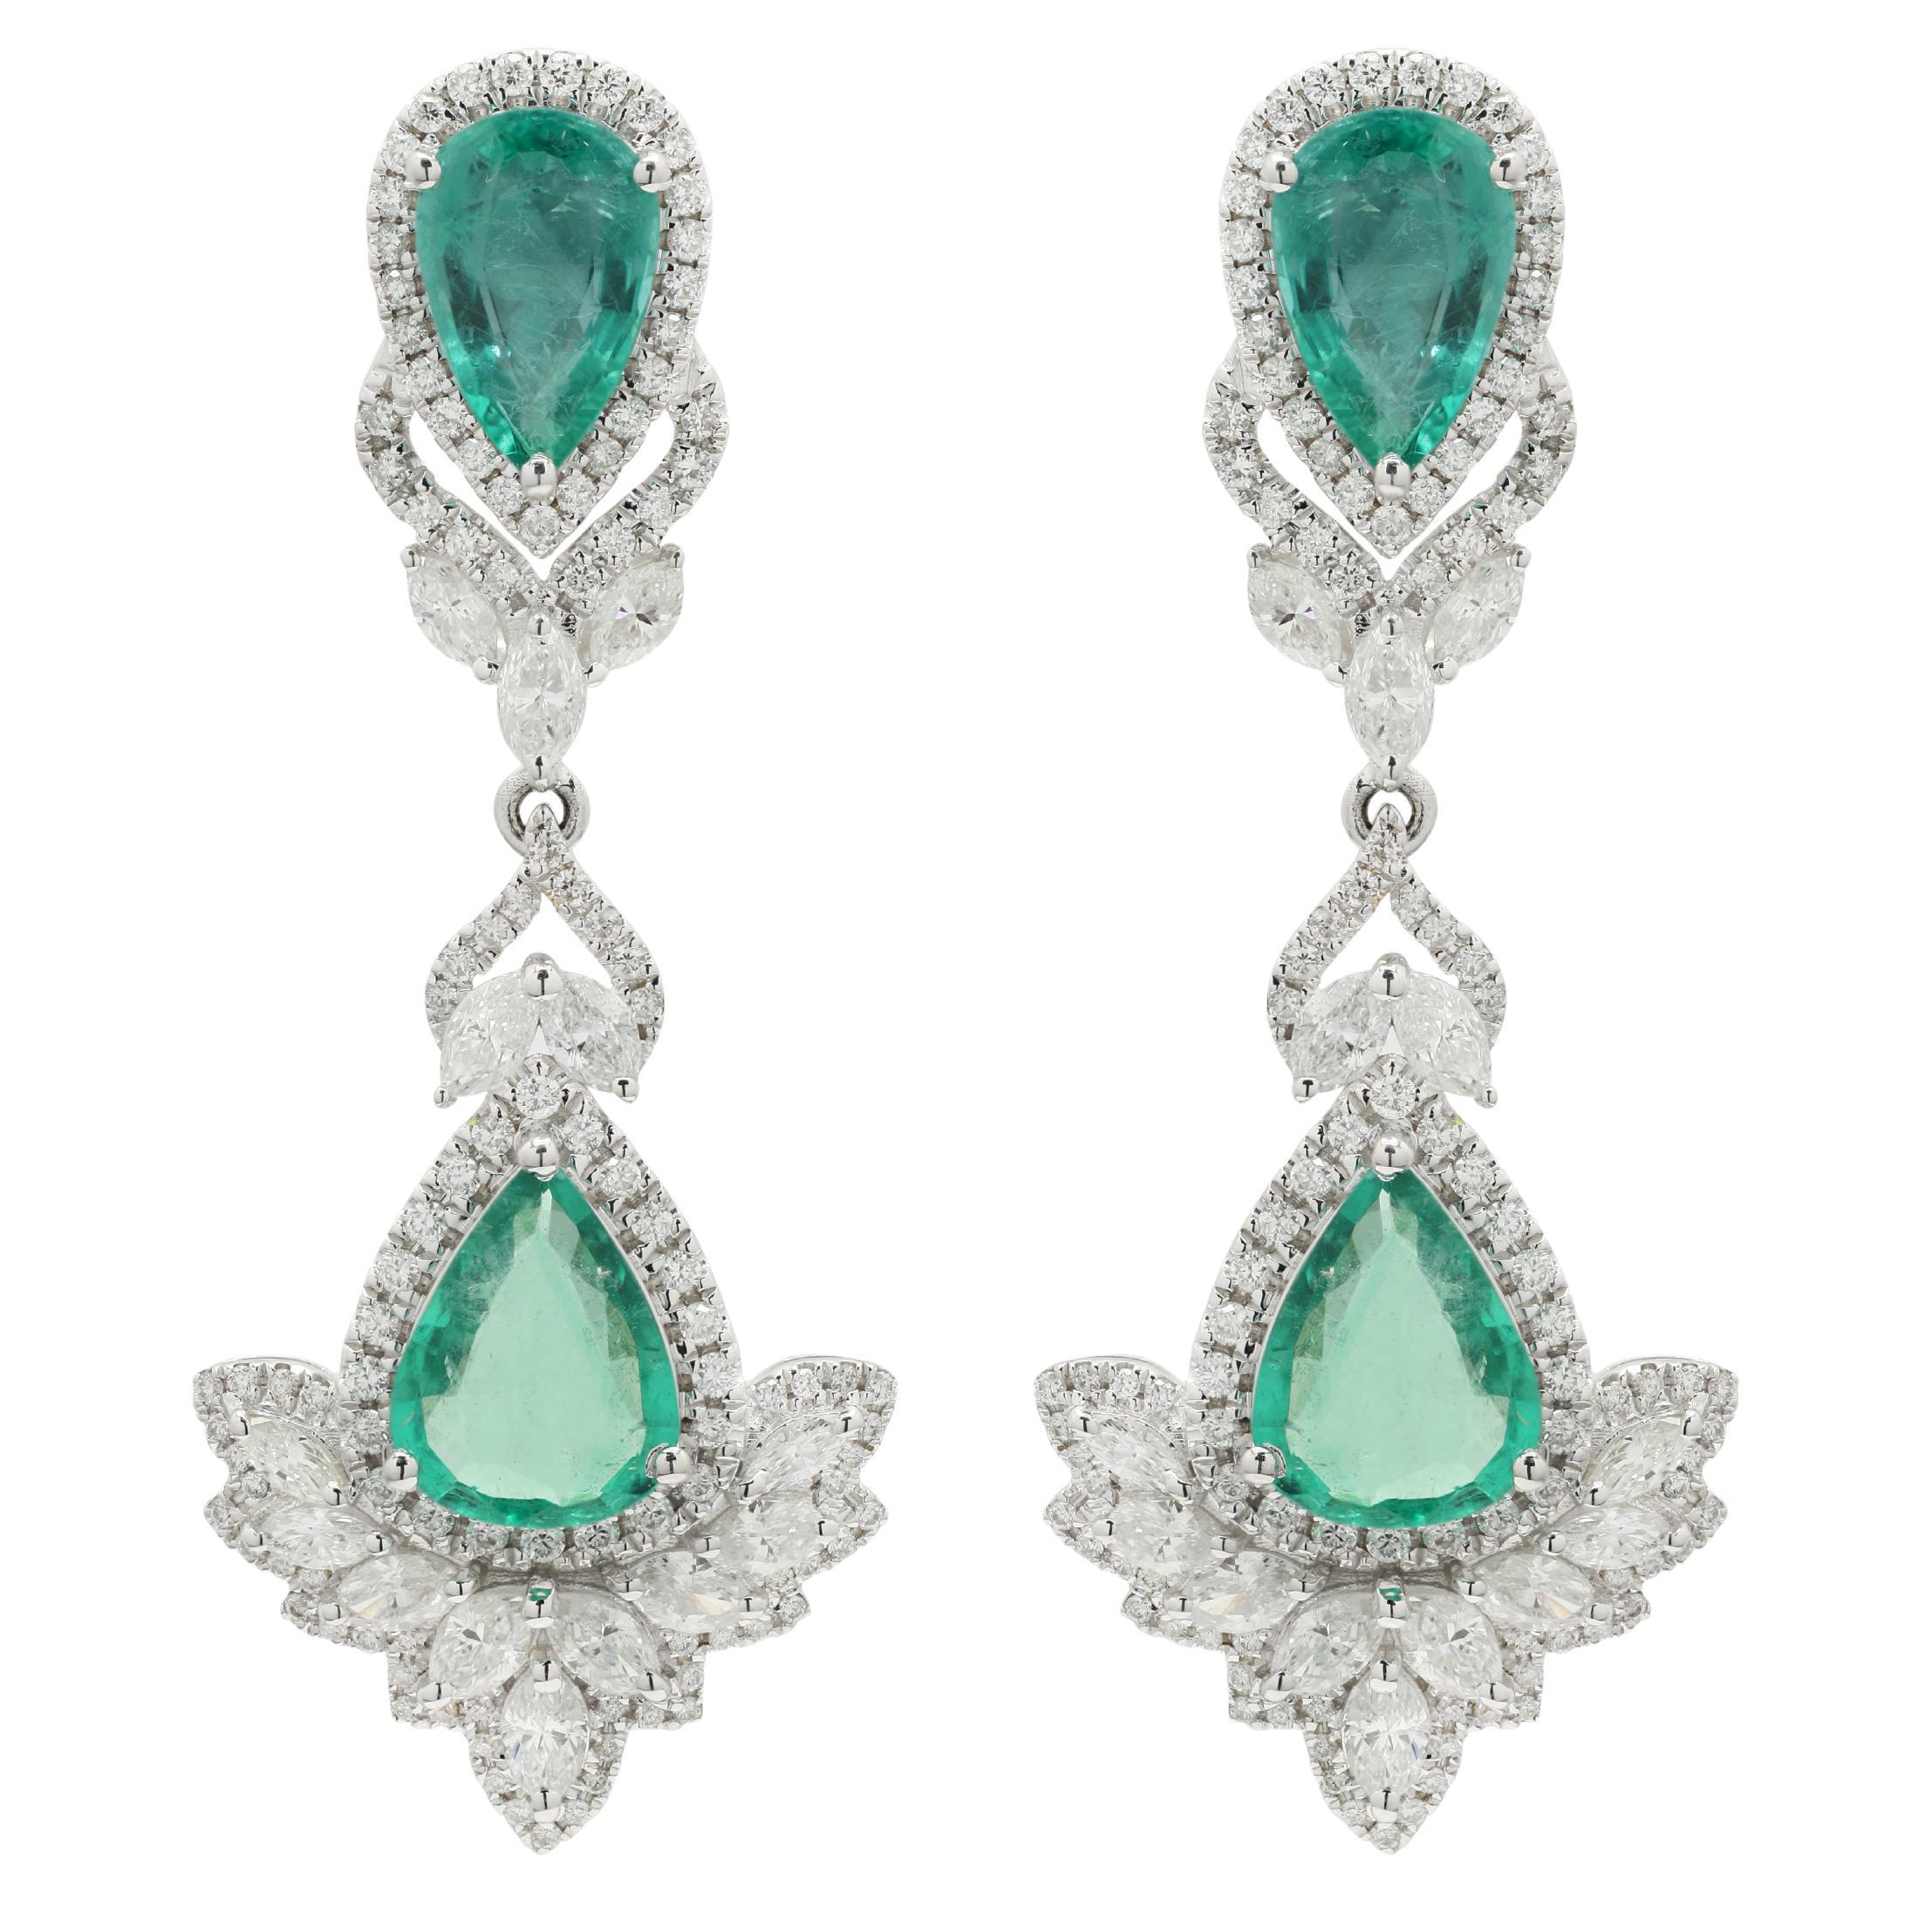 Astonishing 4.23 Ct Emerald and Diamond Wedding Earrings Set in 14K White Gold